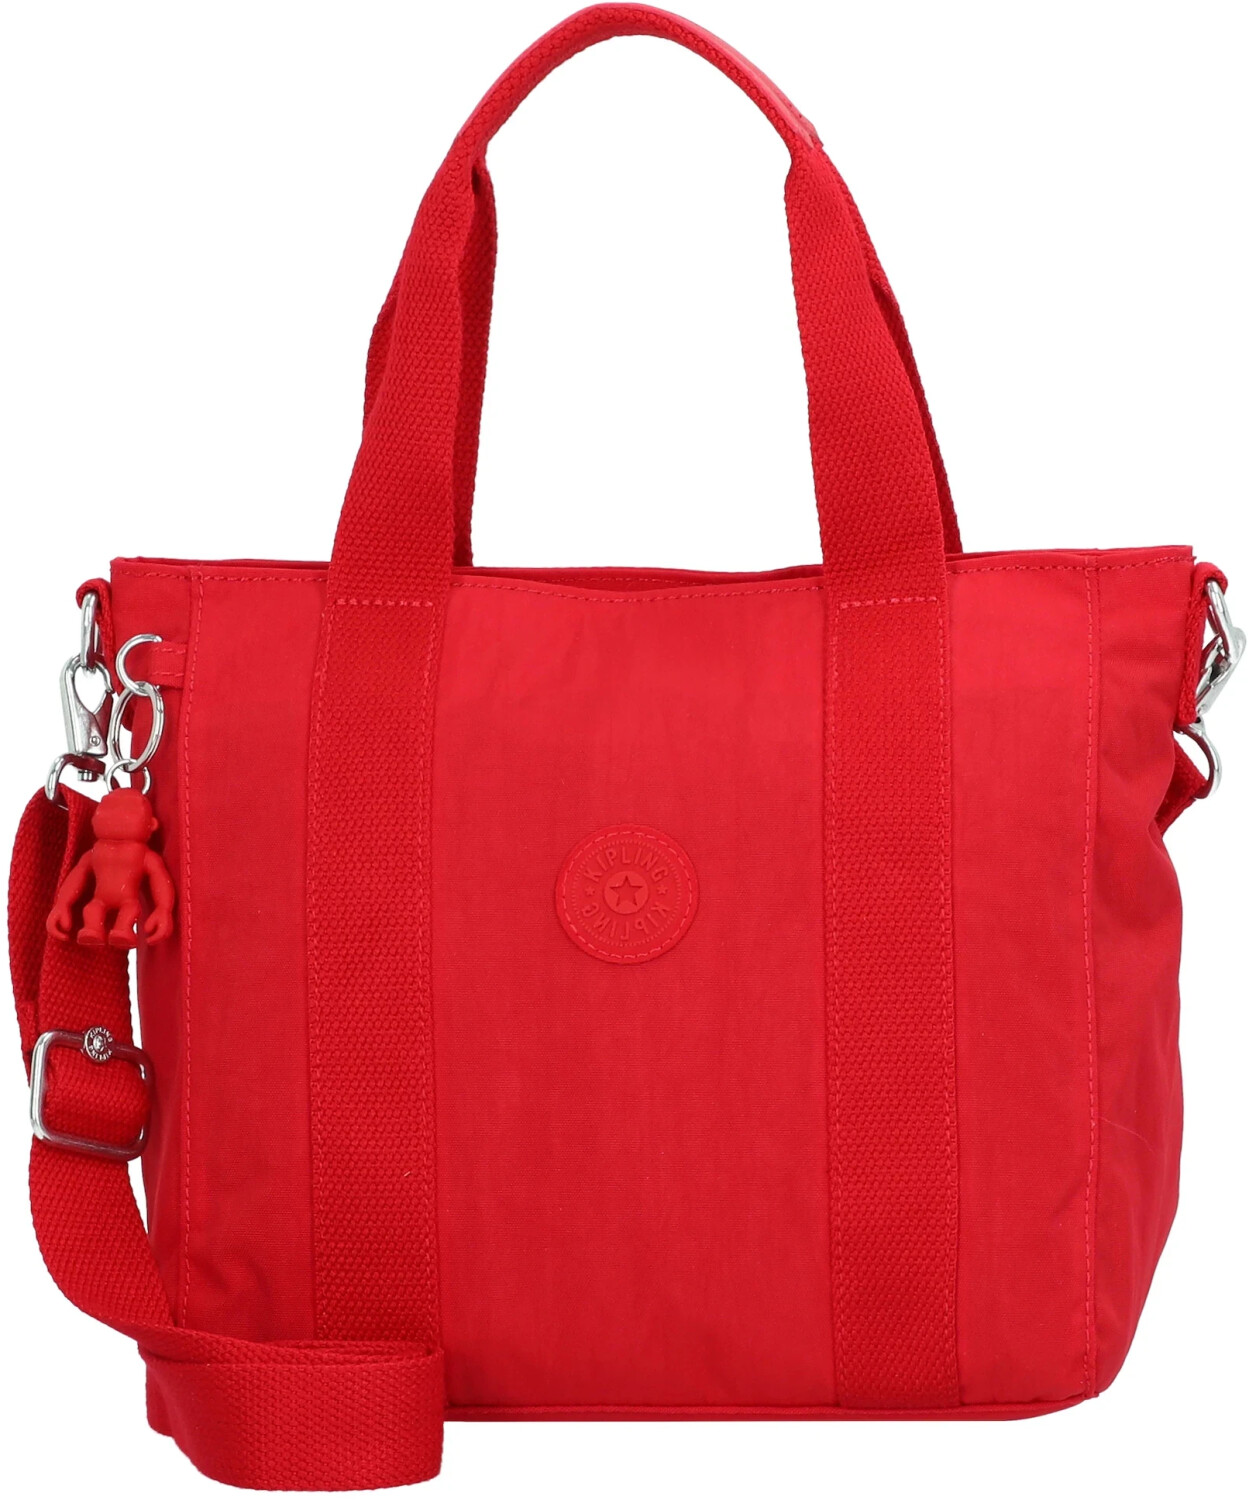 Photos - Travel Bags Kipling Asseni Mini red rouge 